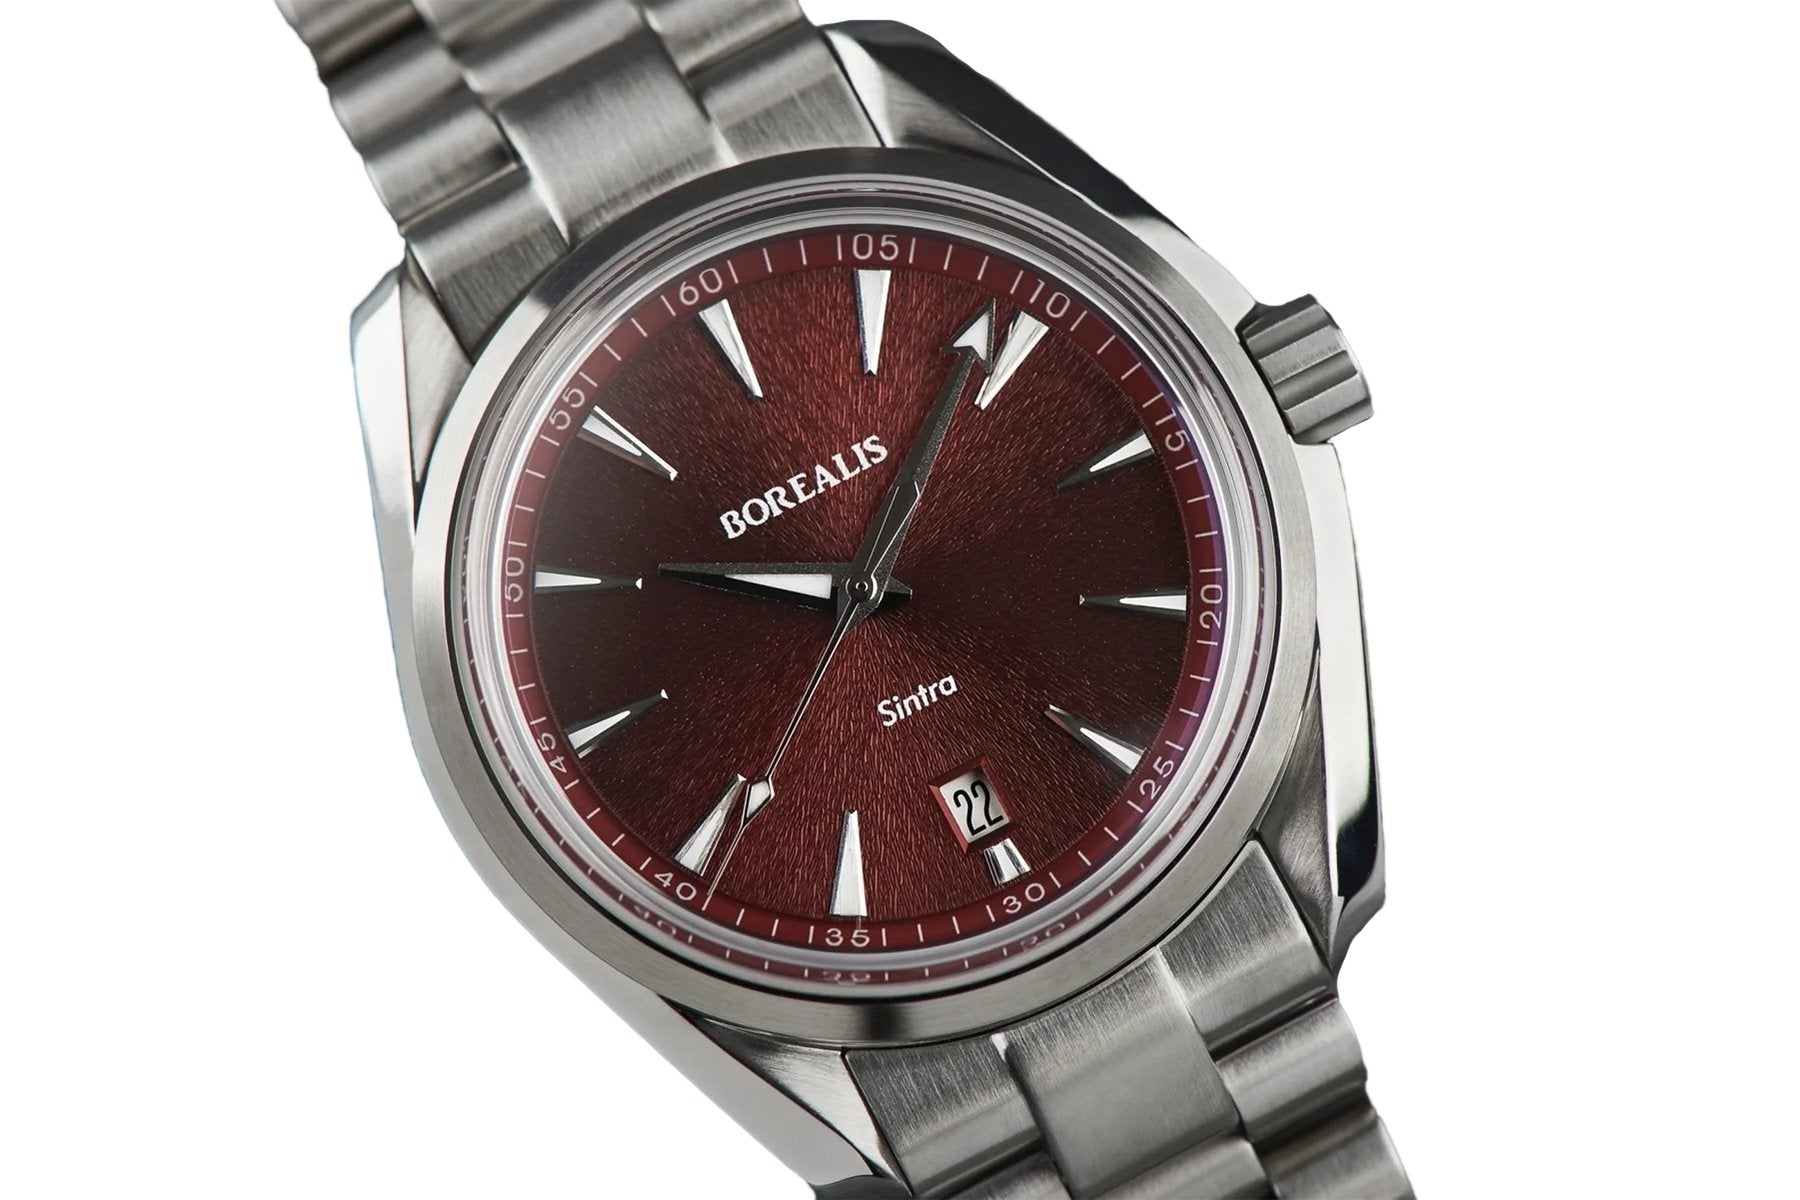 Borealis Sintra Red Sunray dial date Miyota 9015 automatic movement version B.C2 - Borealis Watch Company